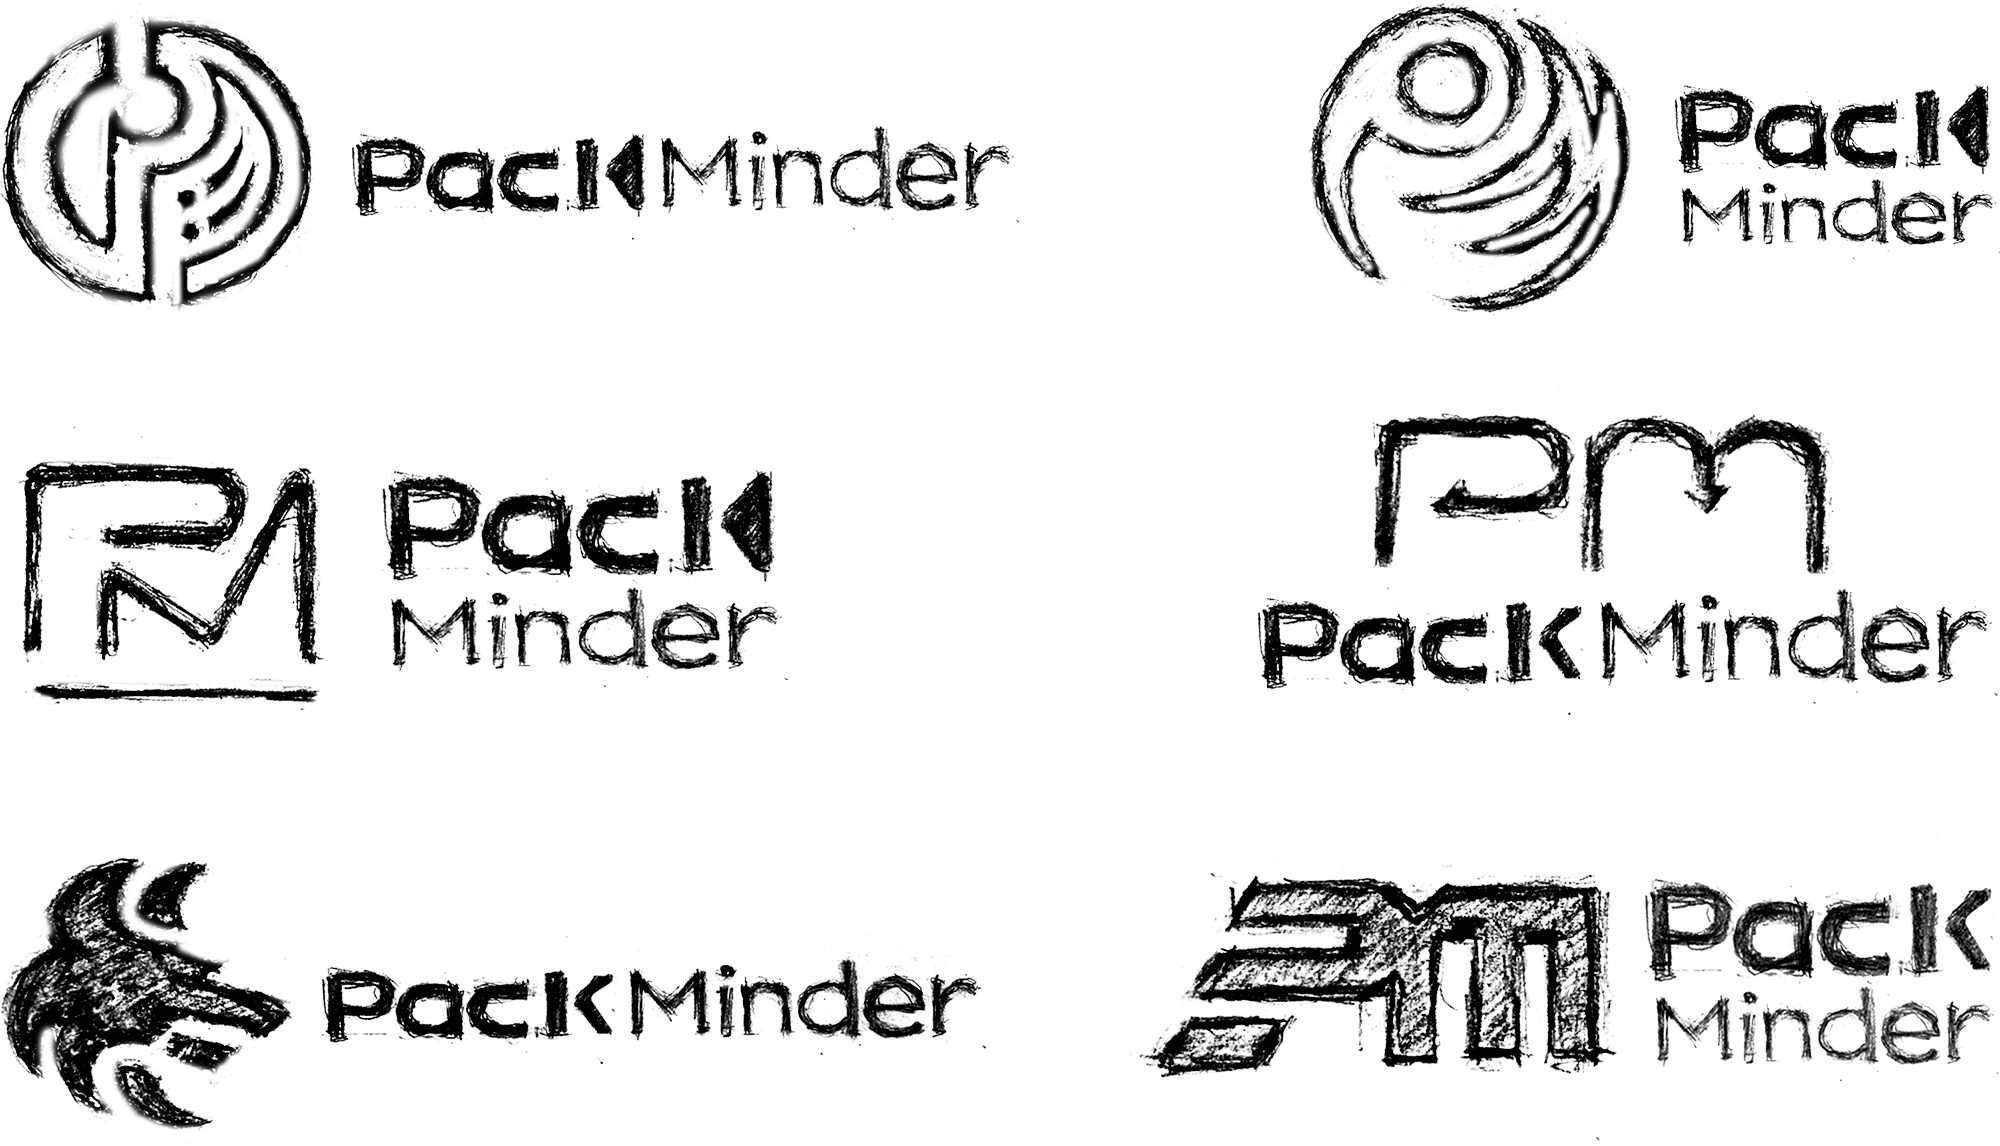 PackMinder logo sketches